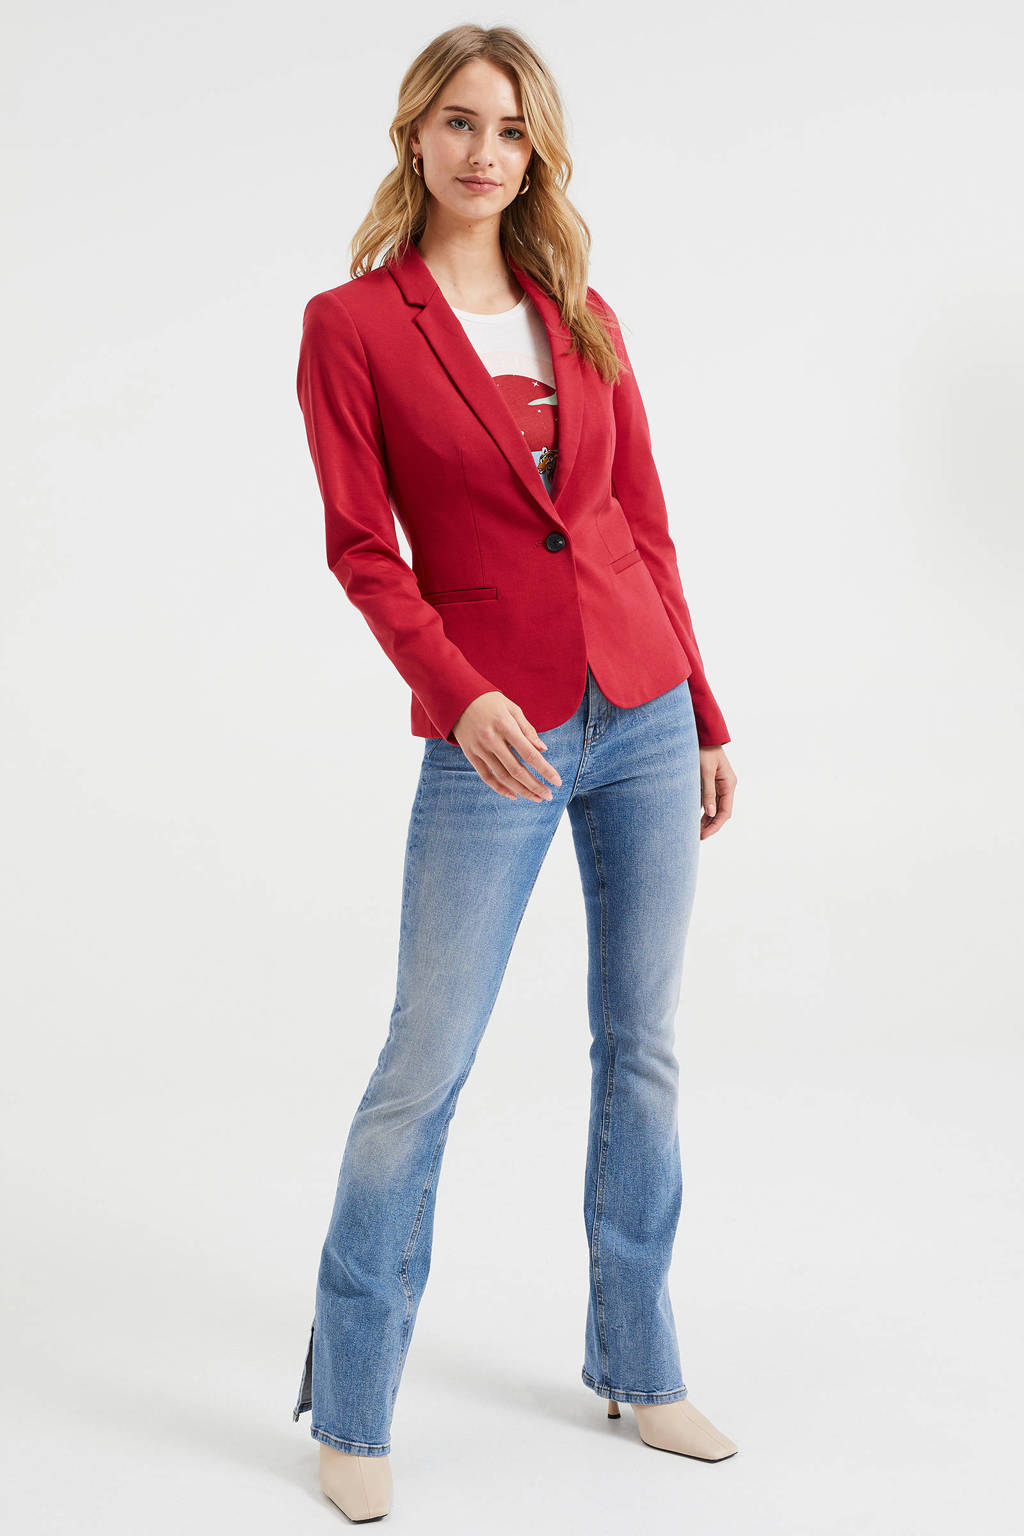 Rode dames WE Fashion jersey blazer van viscose met lange mouwen, reverskraag, knoopsluiting en plooien